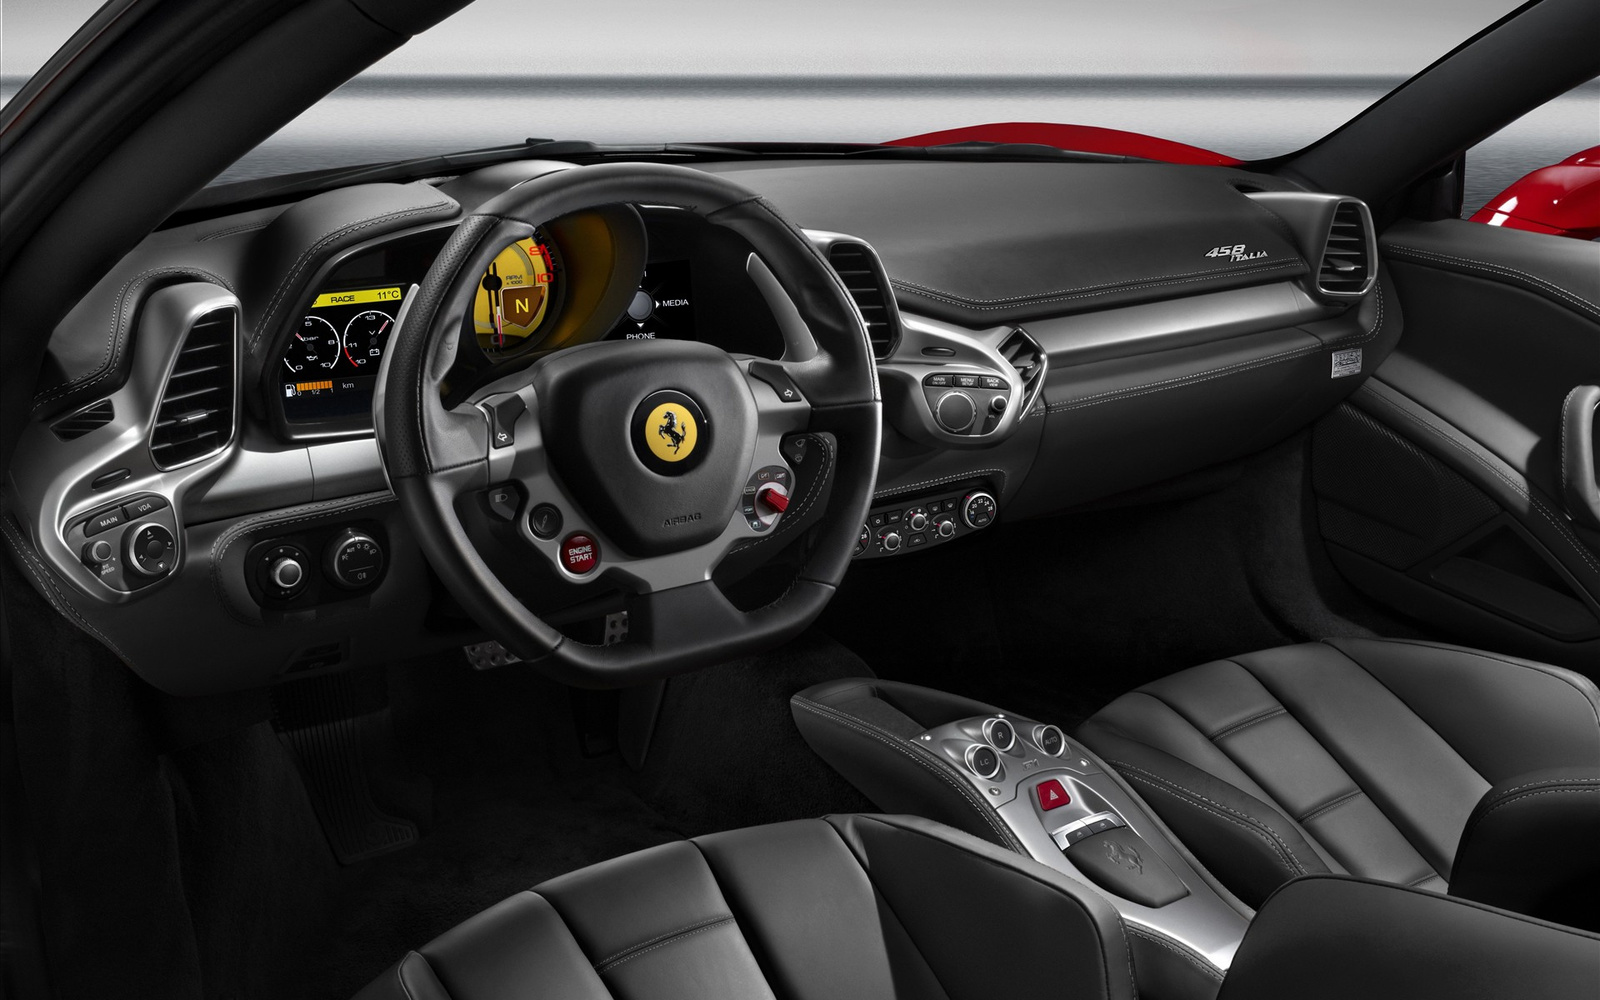 New-Photos-of-Ferrari-458-Italia-widescreen-11